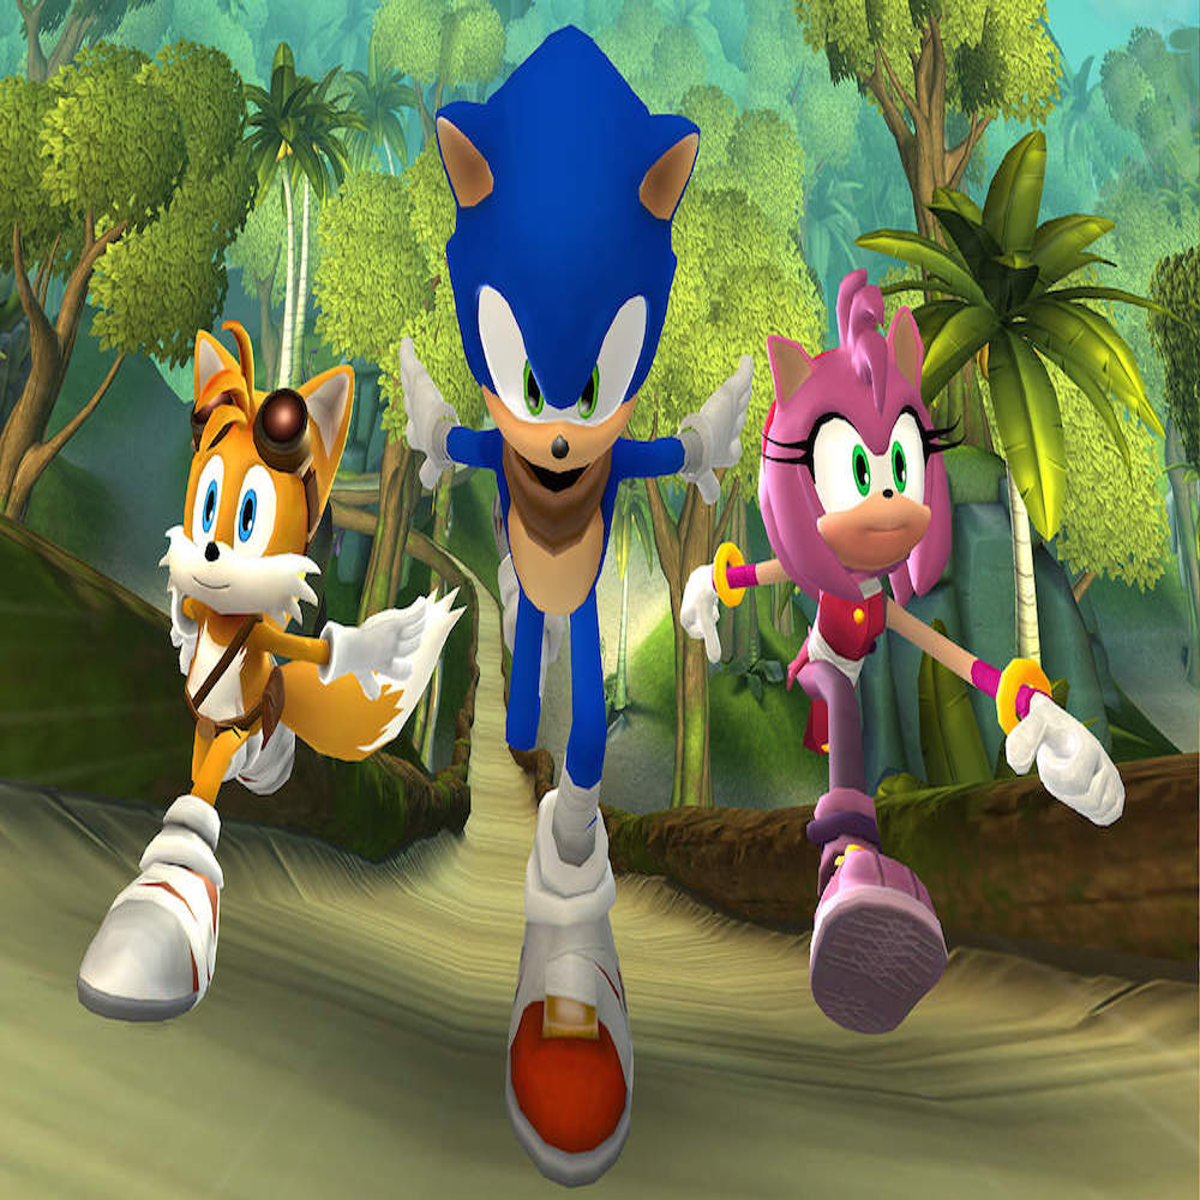 Sonic Dash em Jogos na Internet